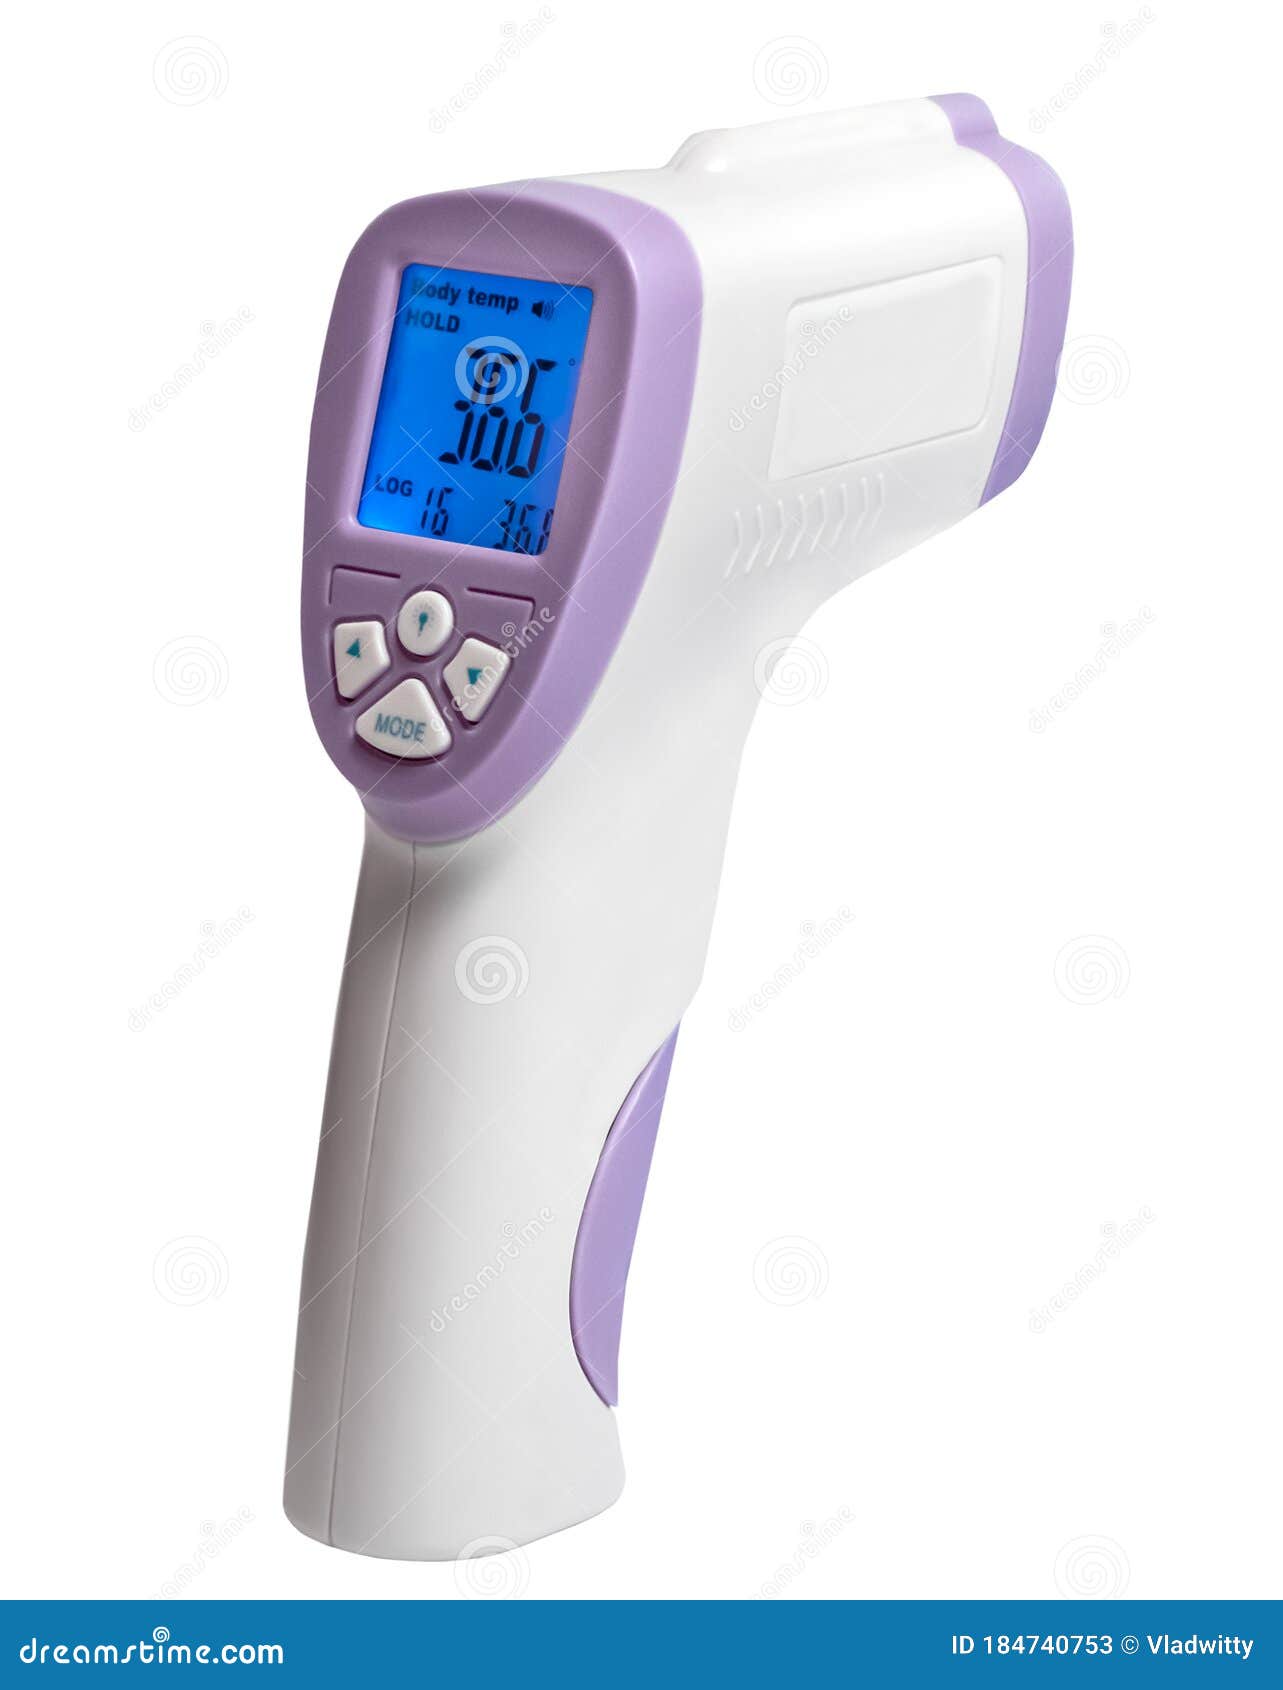 https://thumbs.dreamstime.com/z/isometric-medical-digital-infrared-thermometer-temperature-measurement-device-coronavirus-covid-thermometer-gun-isometric-medical-184740753.jpg